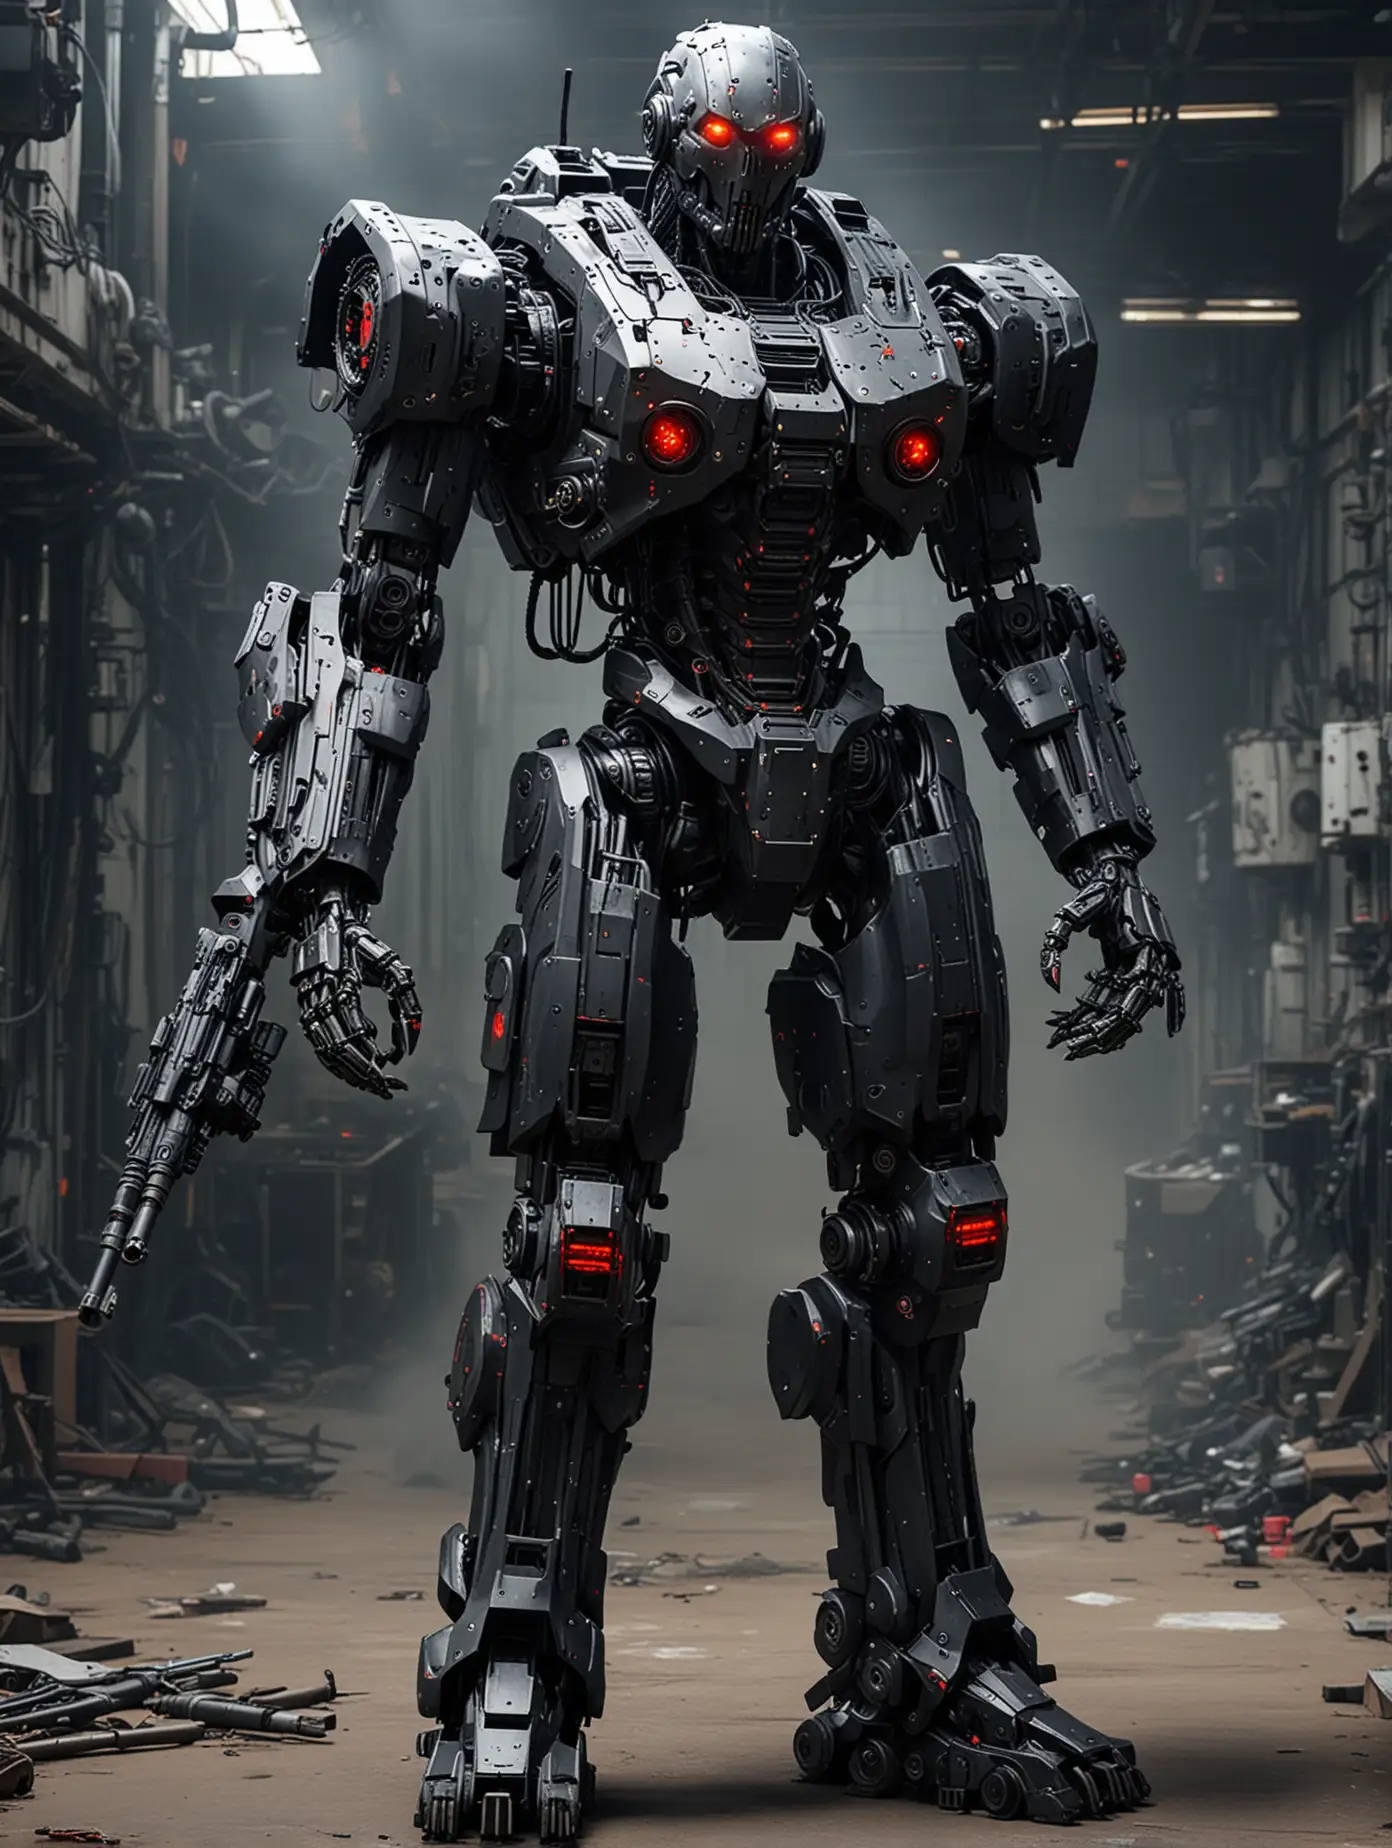 Menacing 97 Feet Tall Black Tactical Robot in Cyberpunk Factory Setting